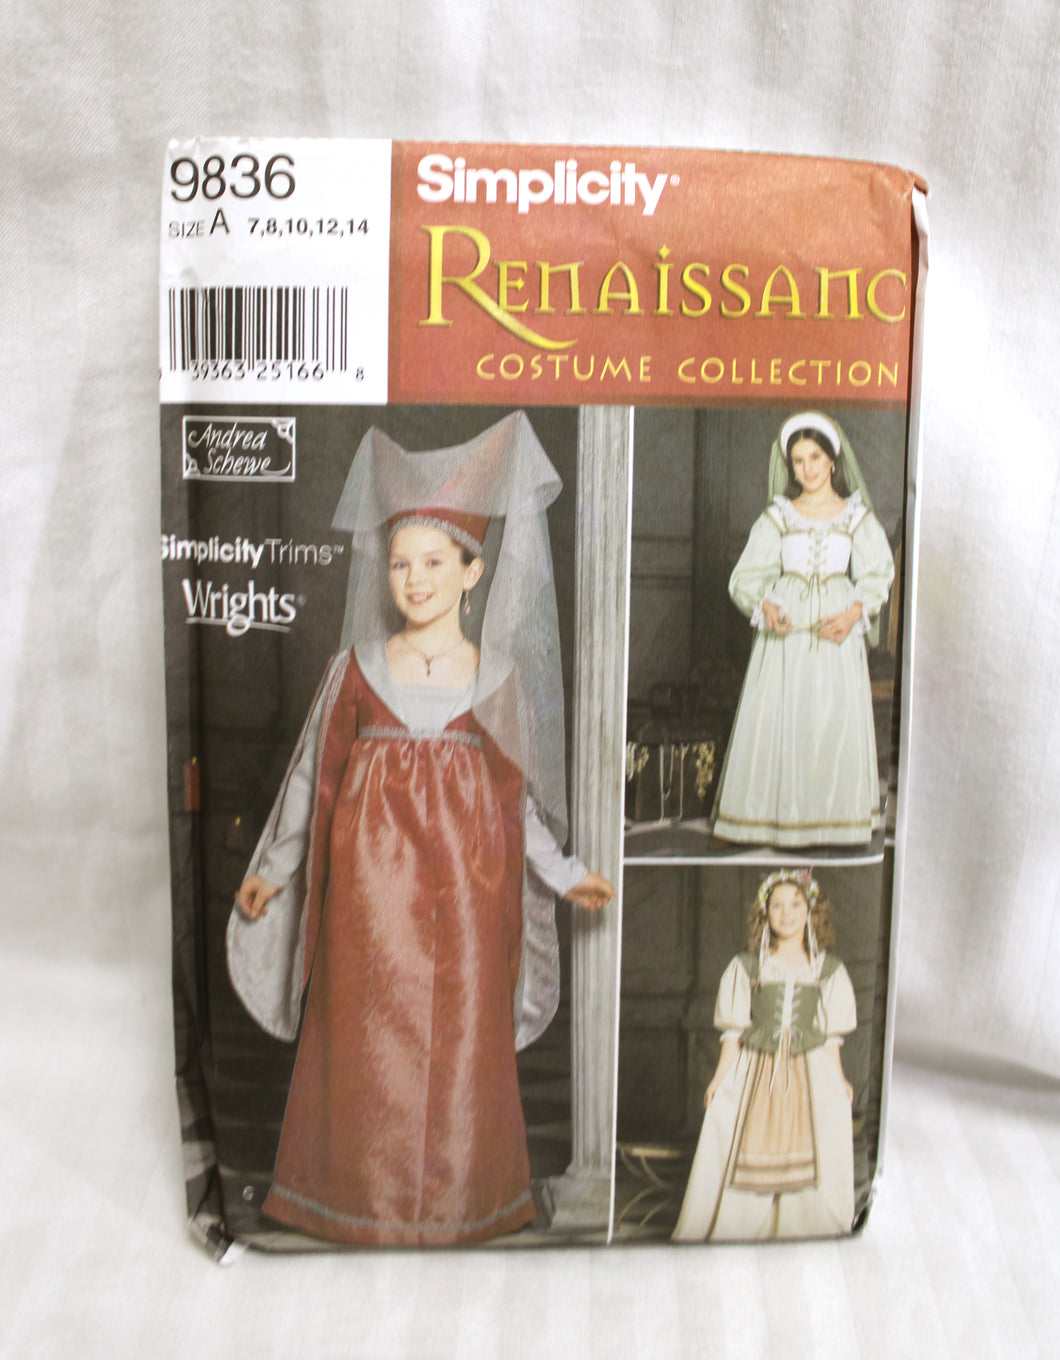 Simplicity Renaissance Costume Collection -Andrea Schewe- #9836 Girls (Children's) Size A (7-14)